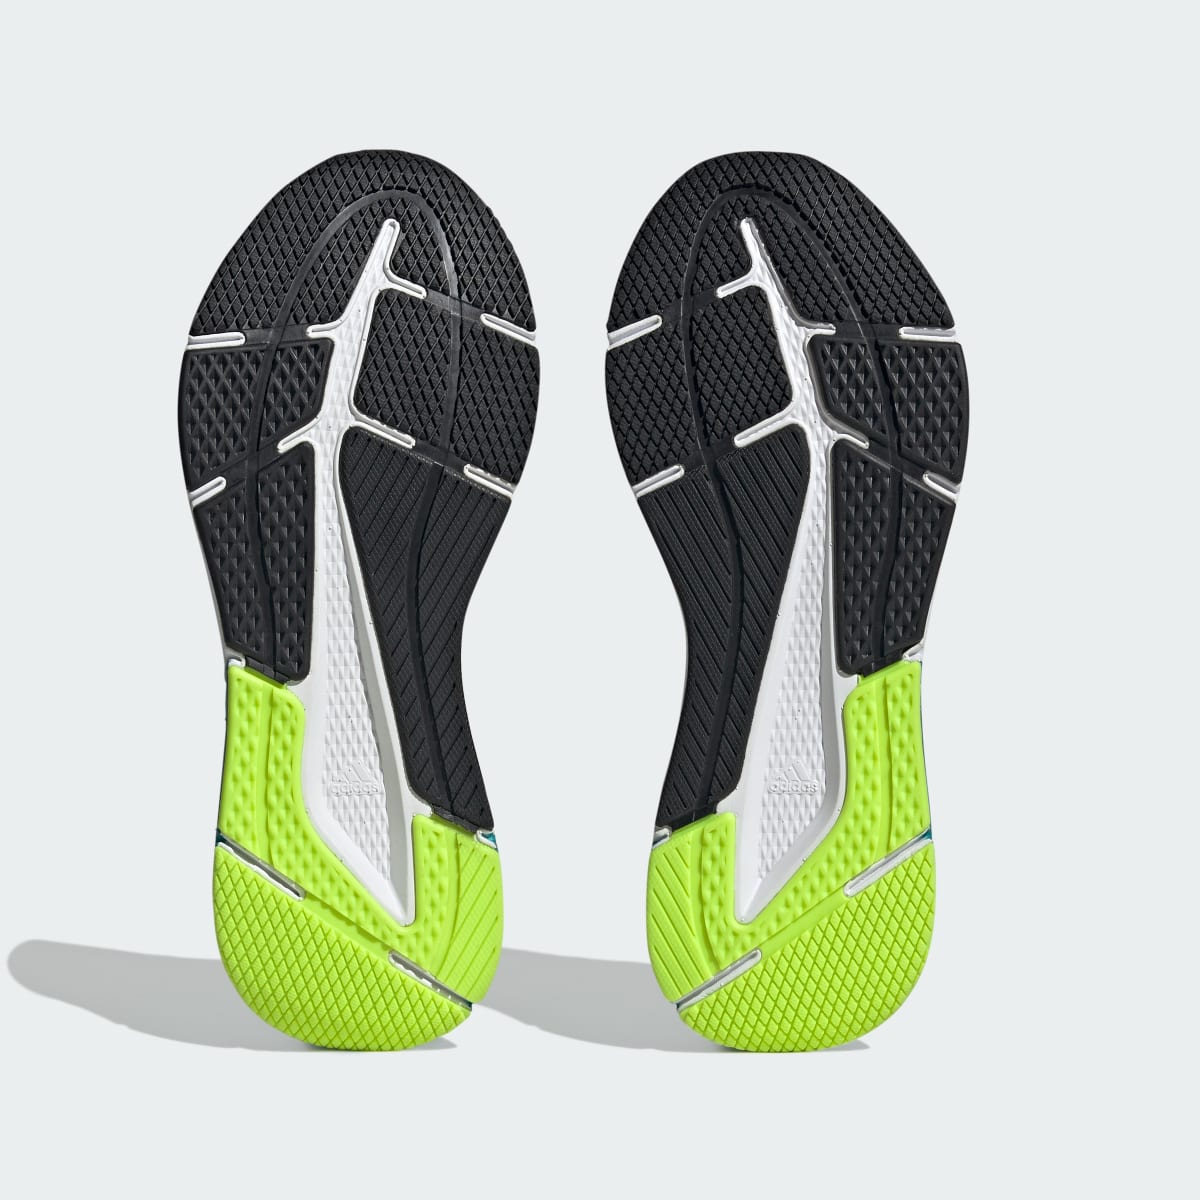 Adidas Questar Shoes. 7